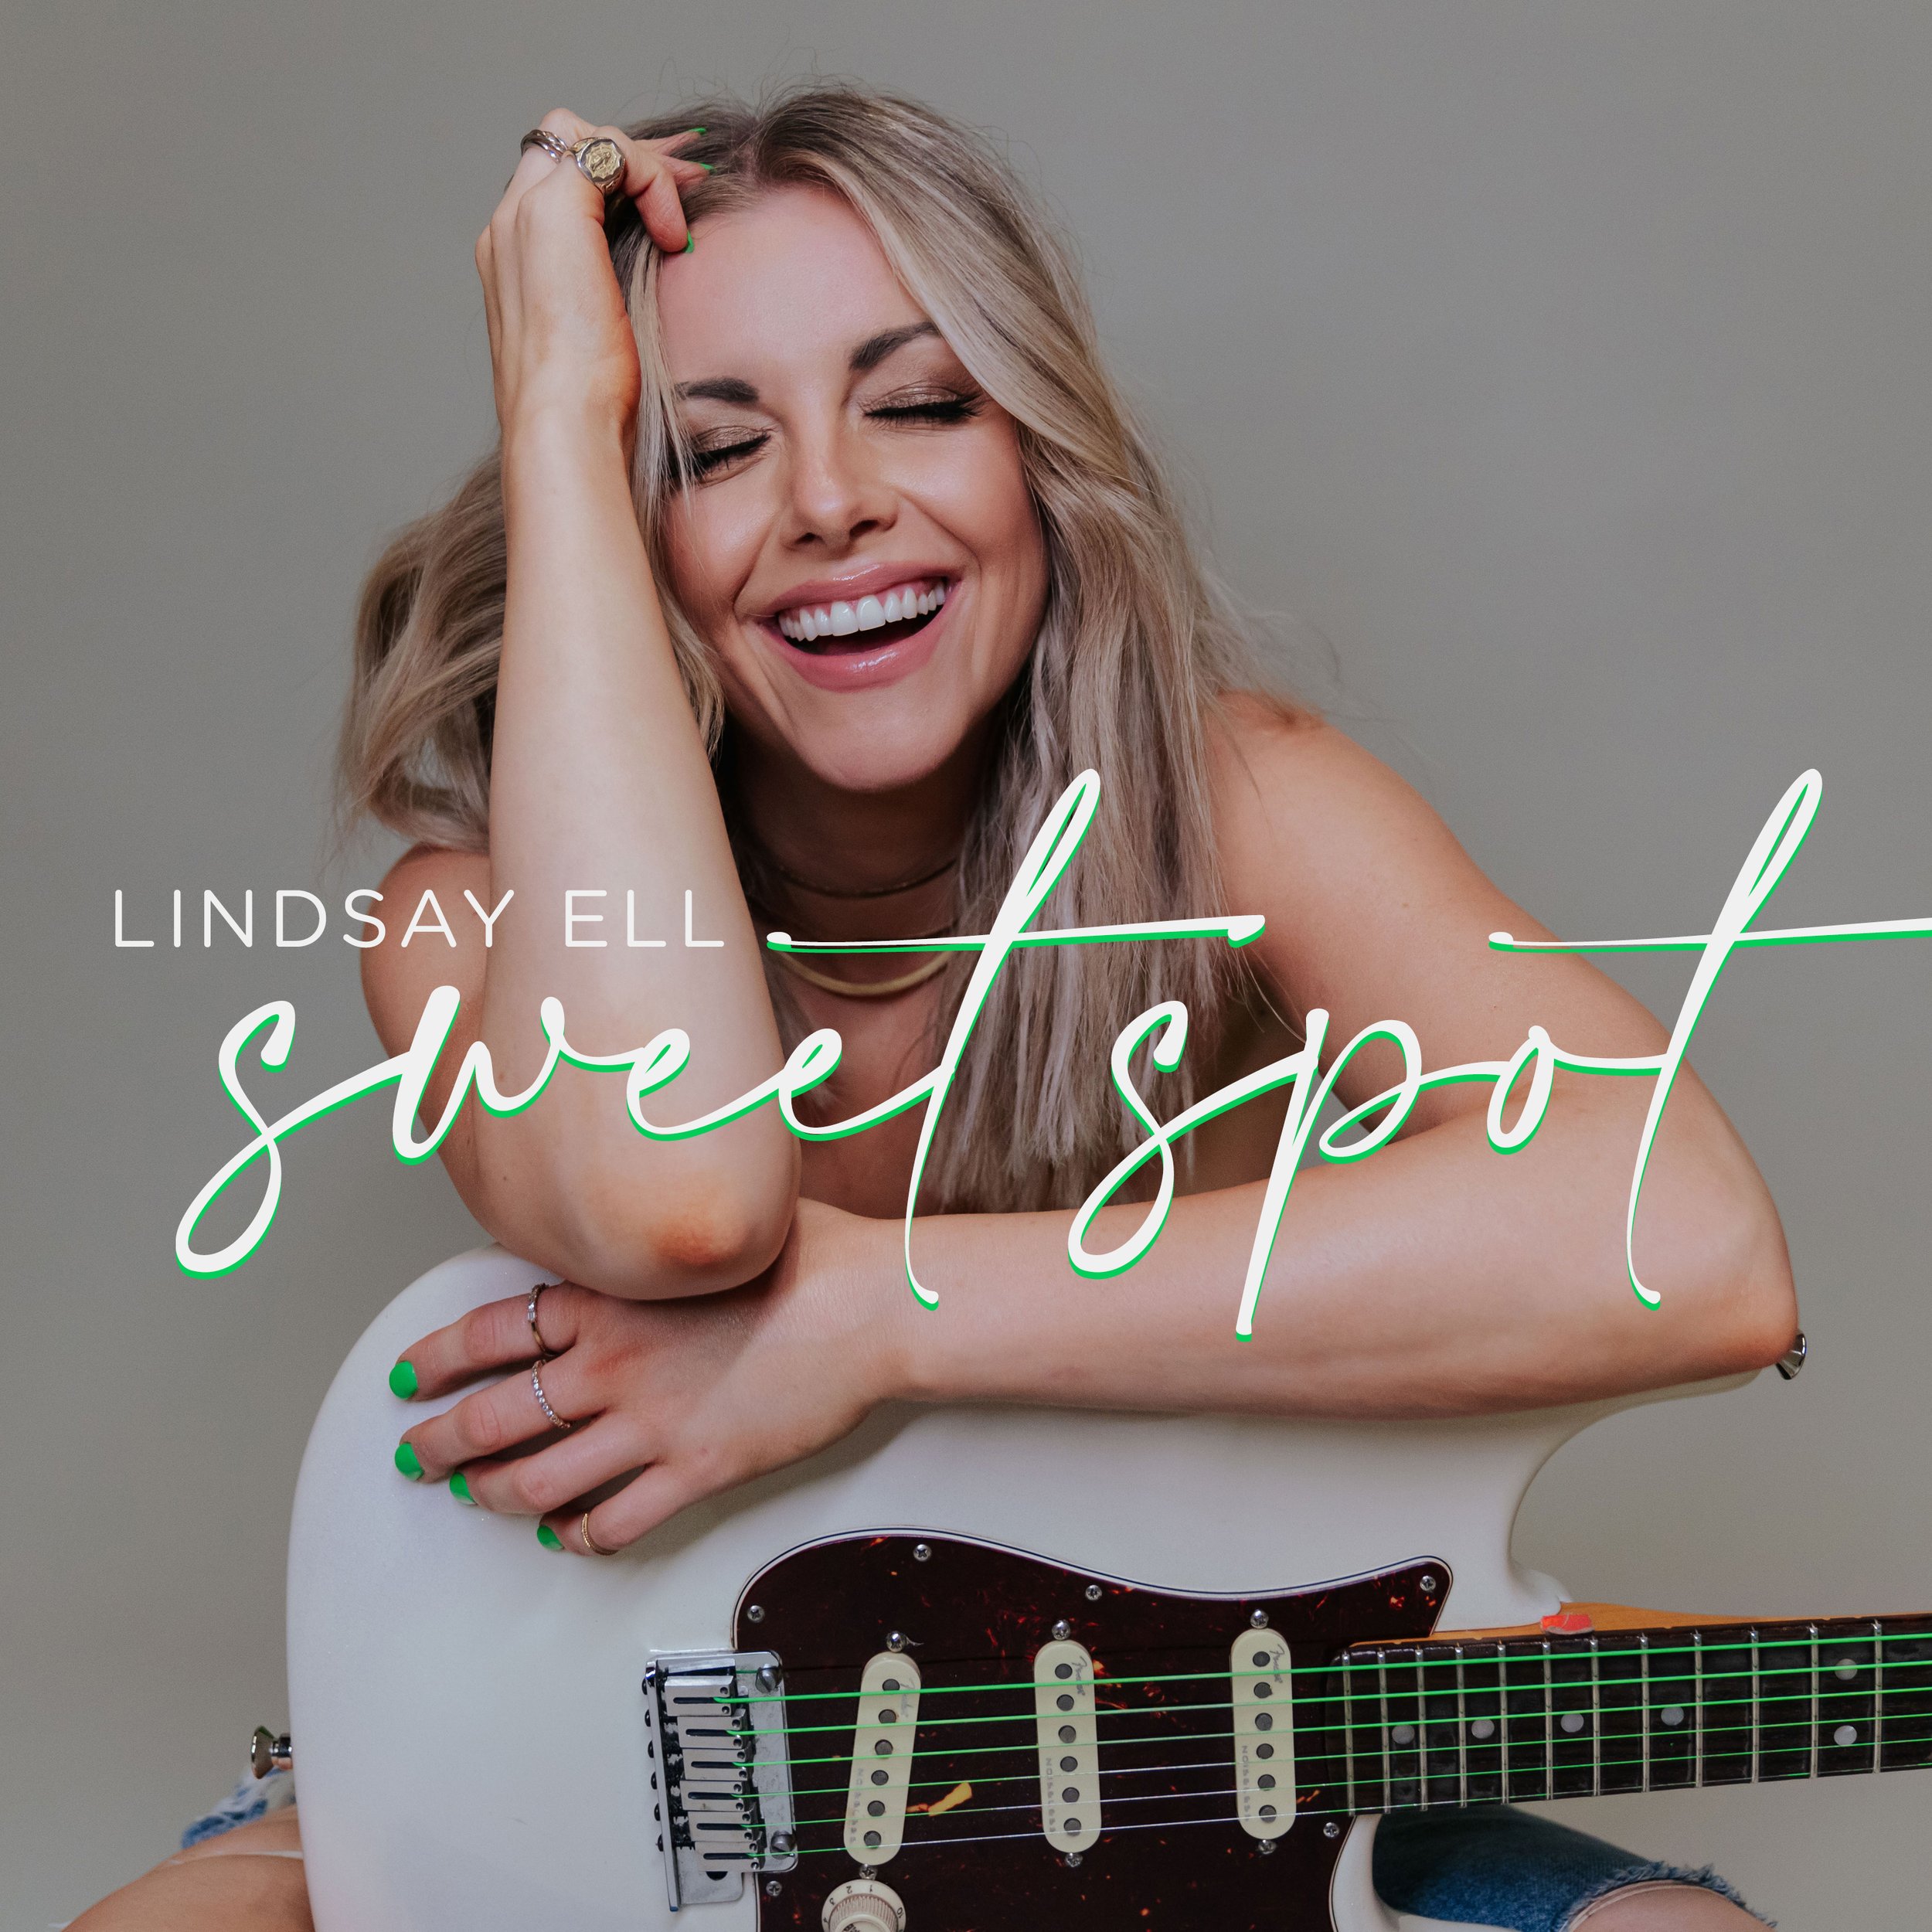 Lindsay Ell - "Sweet Spot" - Single